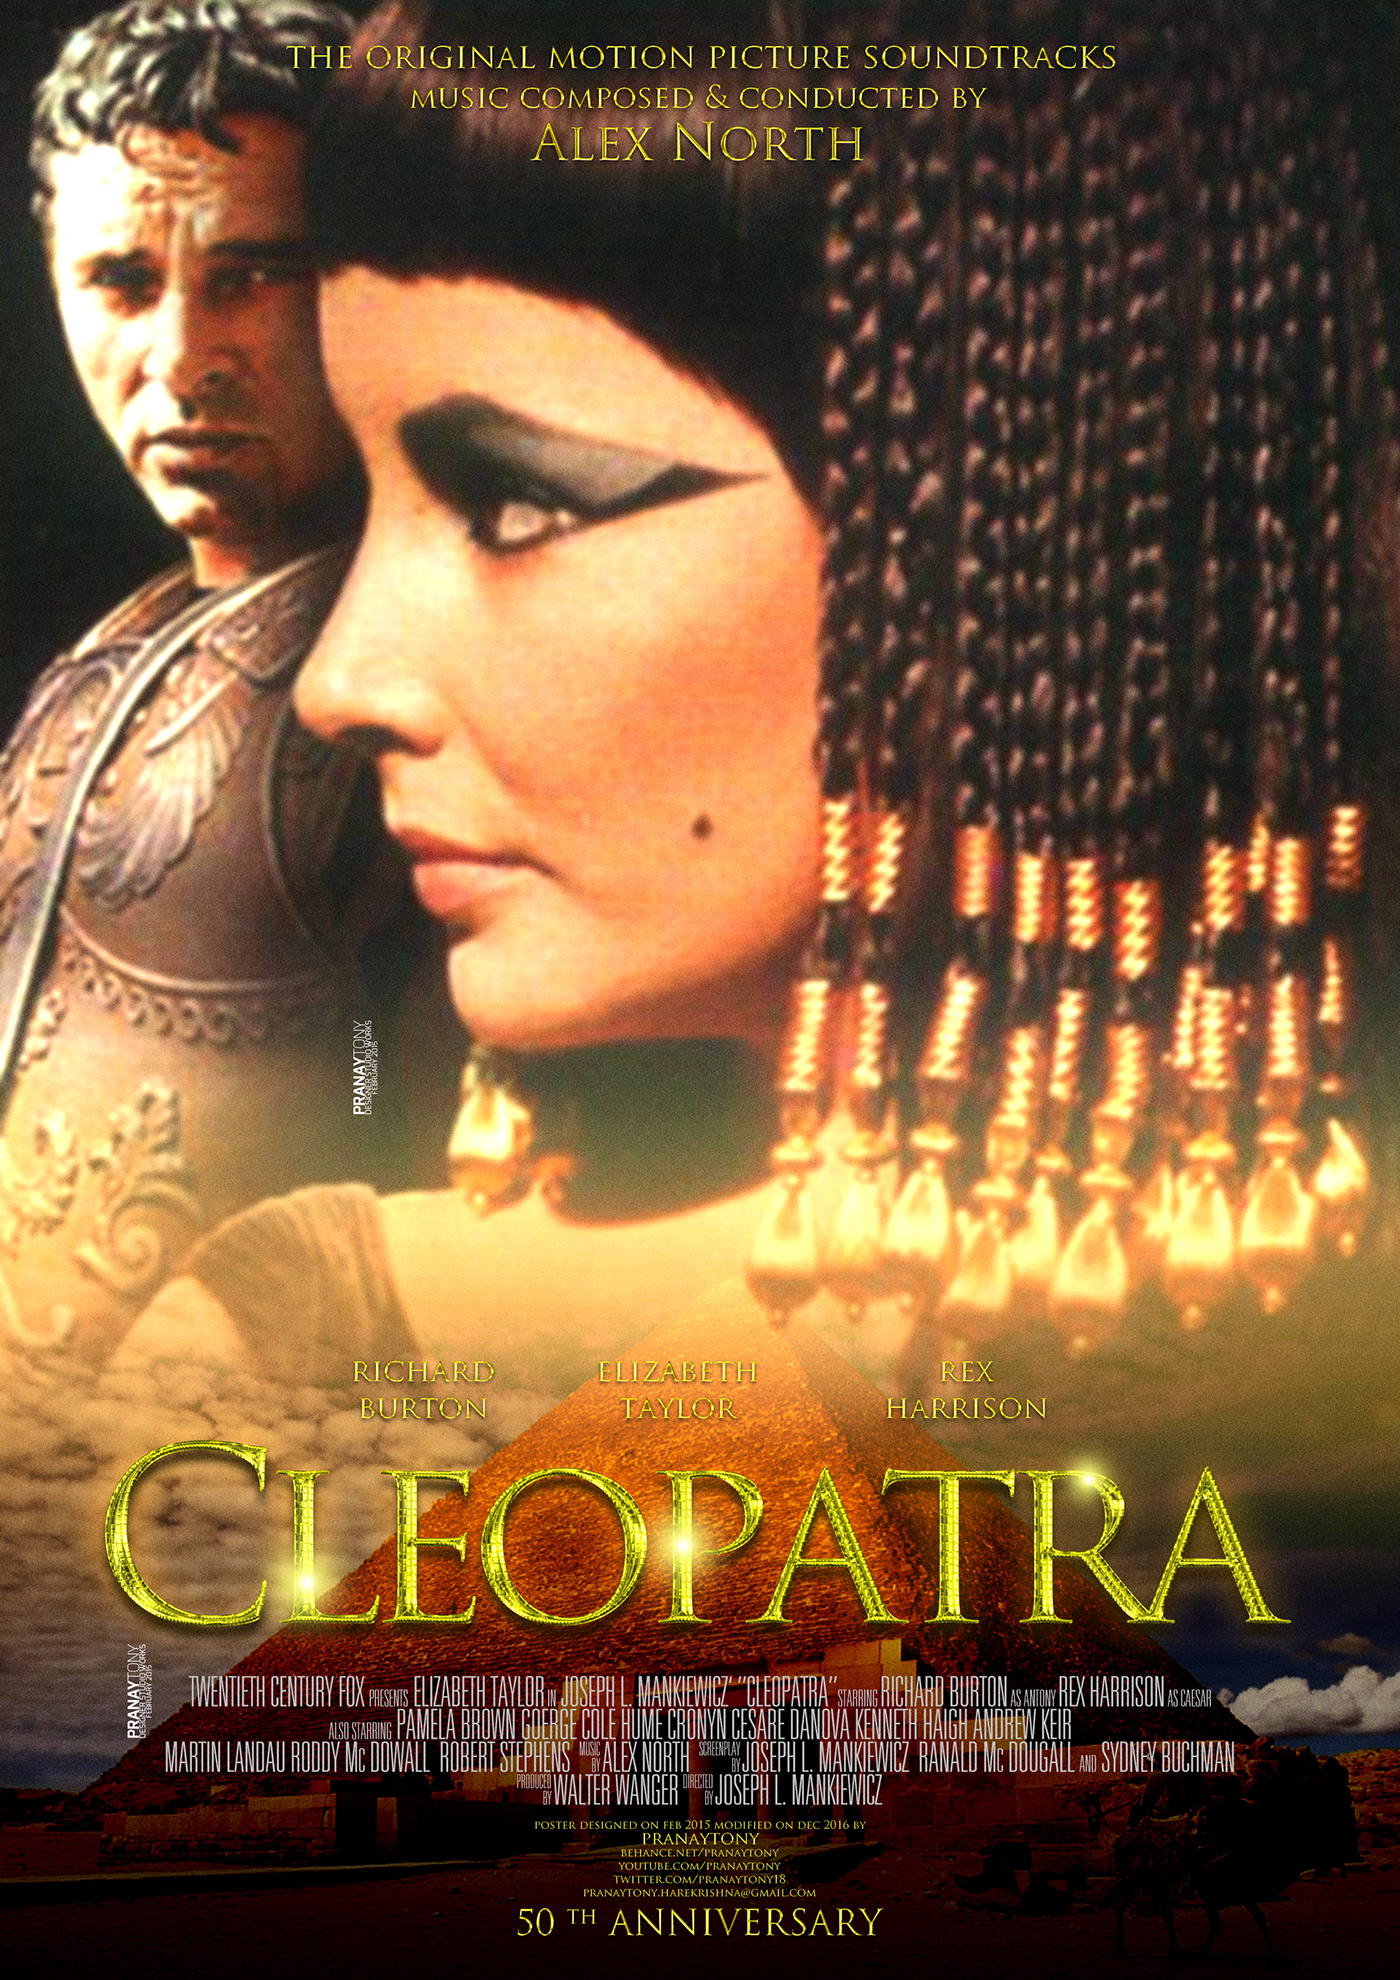 Ps25Under25 cleopatra movie poster Poster Design Poster making gold layer styles alex north composer elizabeth taylor Richard Burton rex harrison